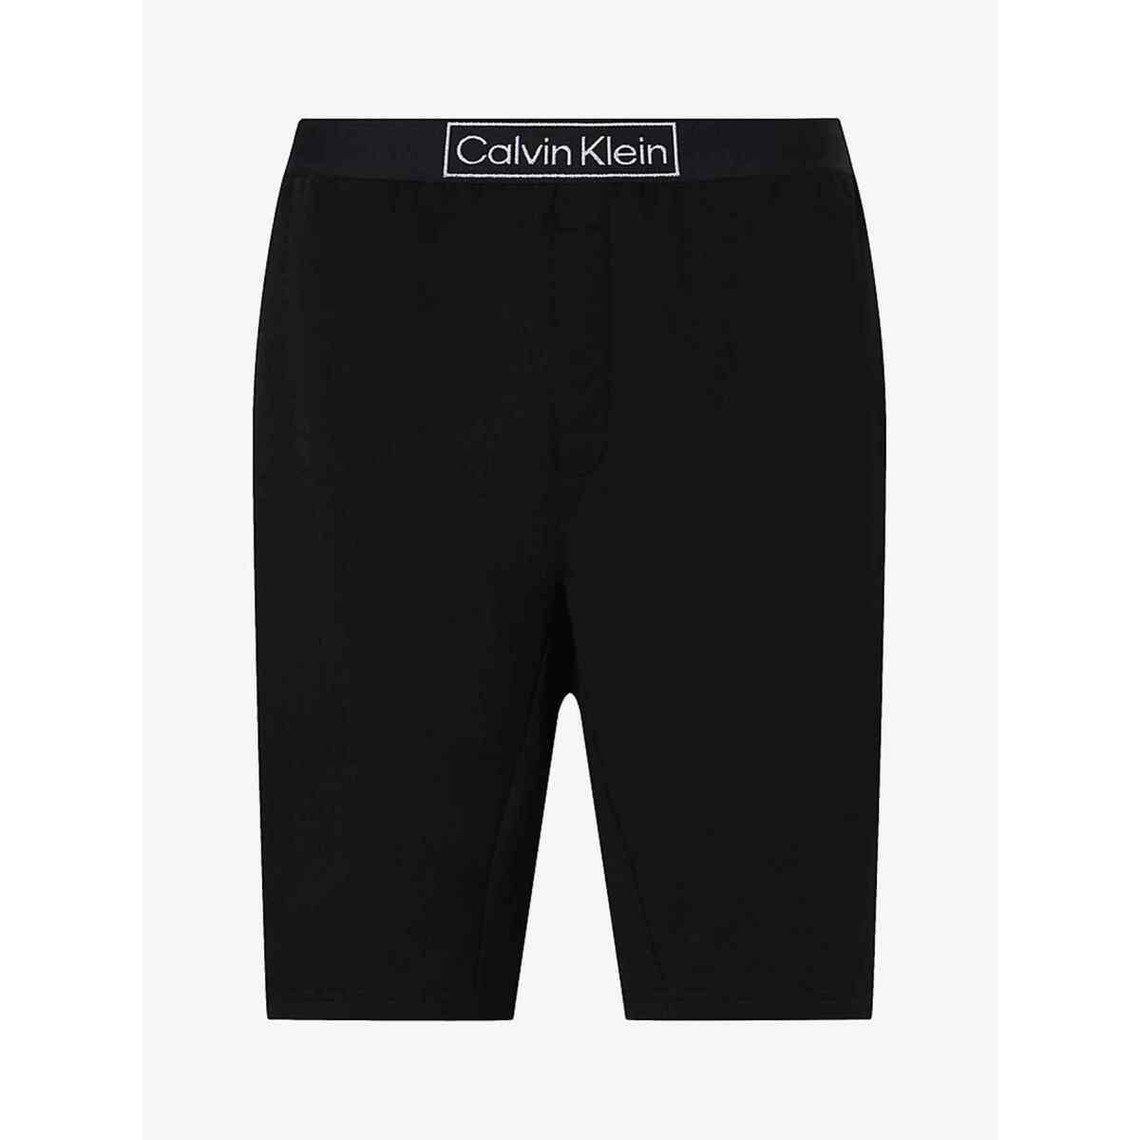 Bas de pyjama - Short Noir Calvin Klein EUROPE Underwear en coton